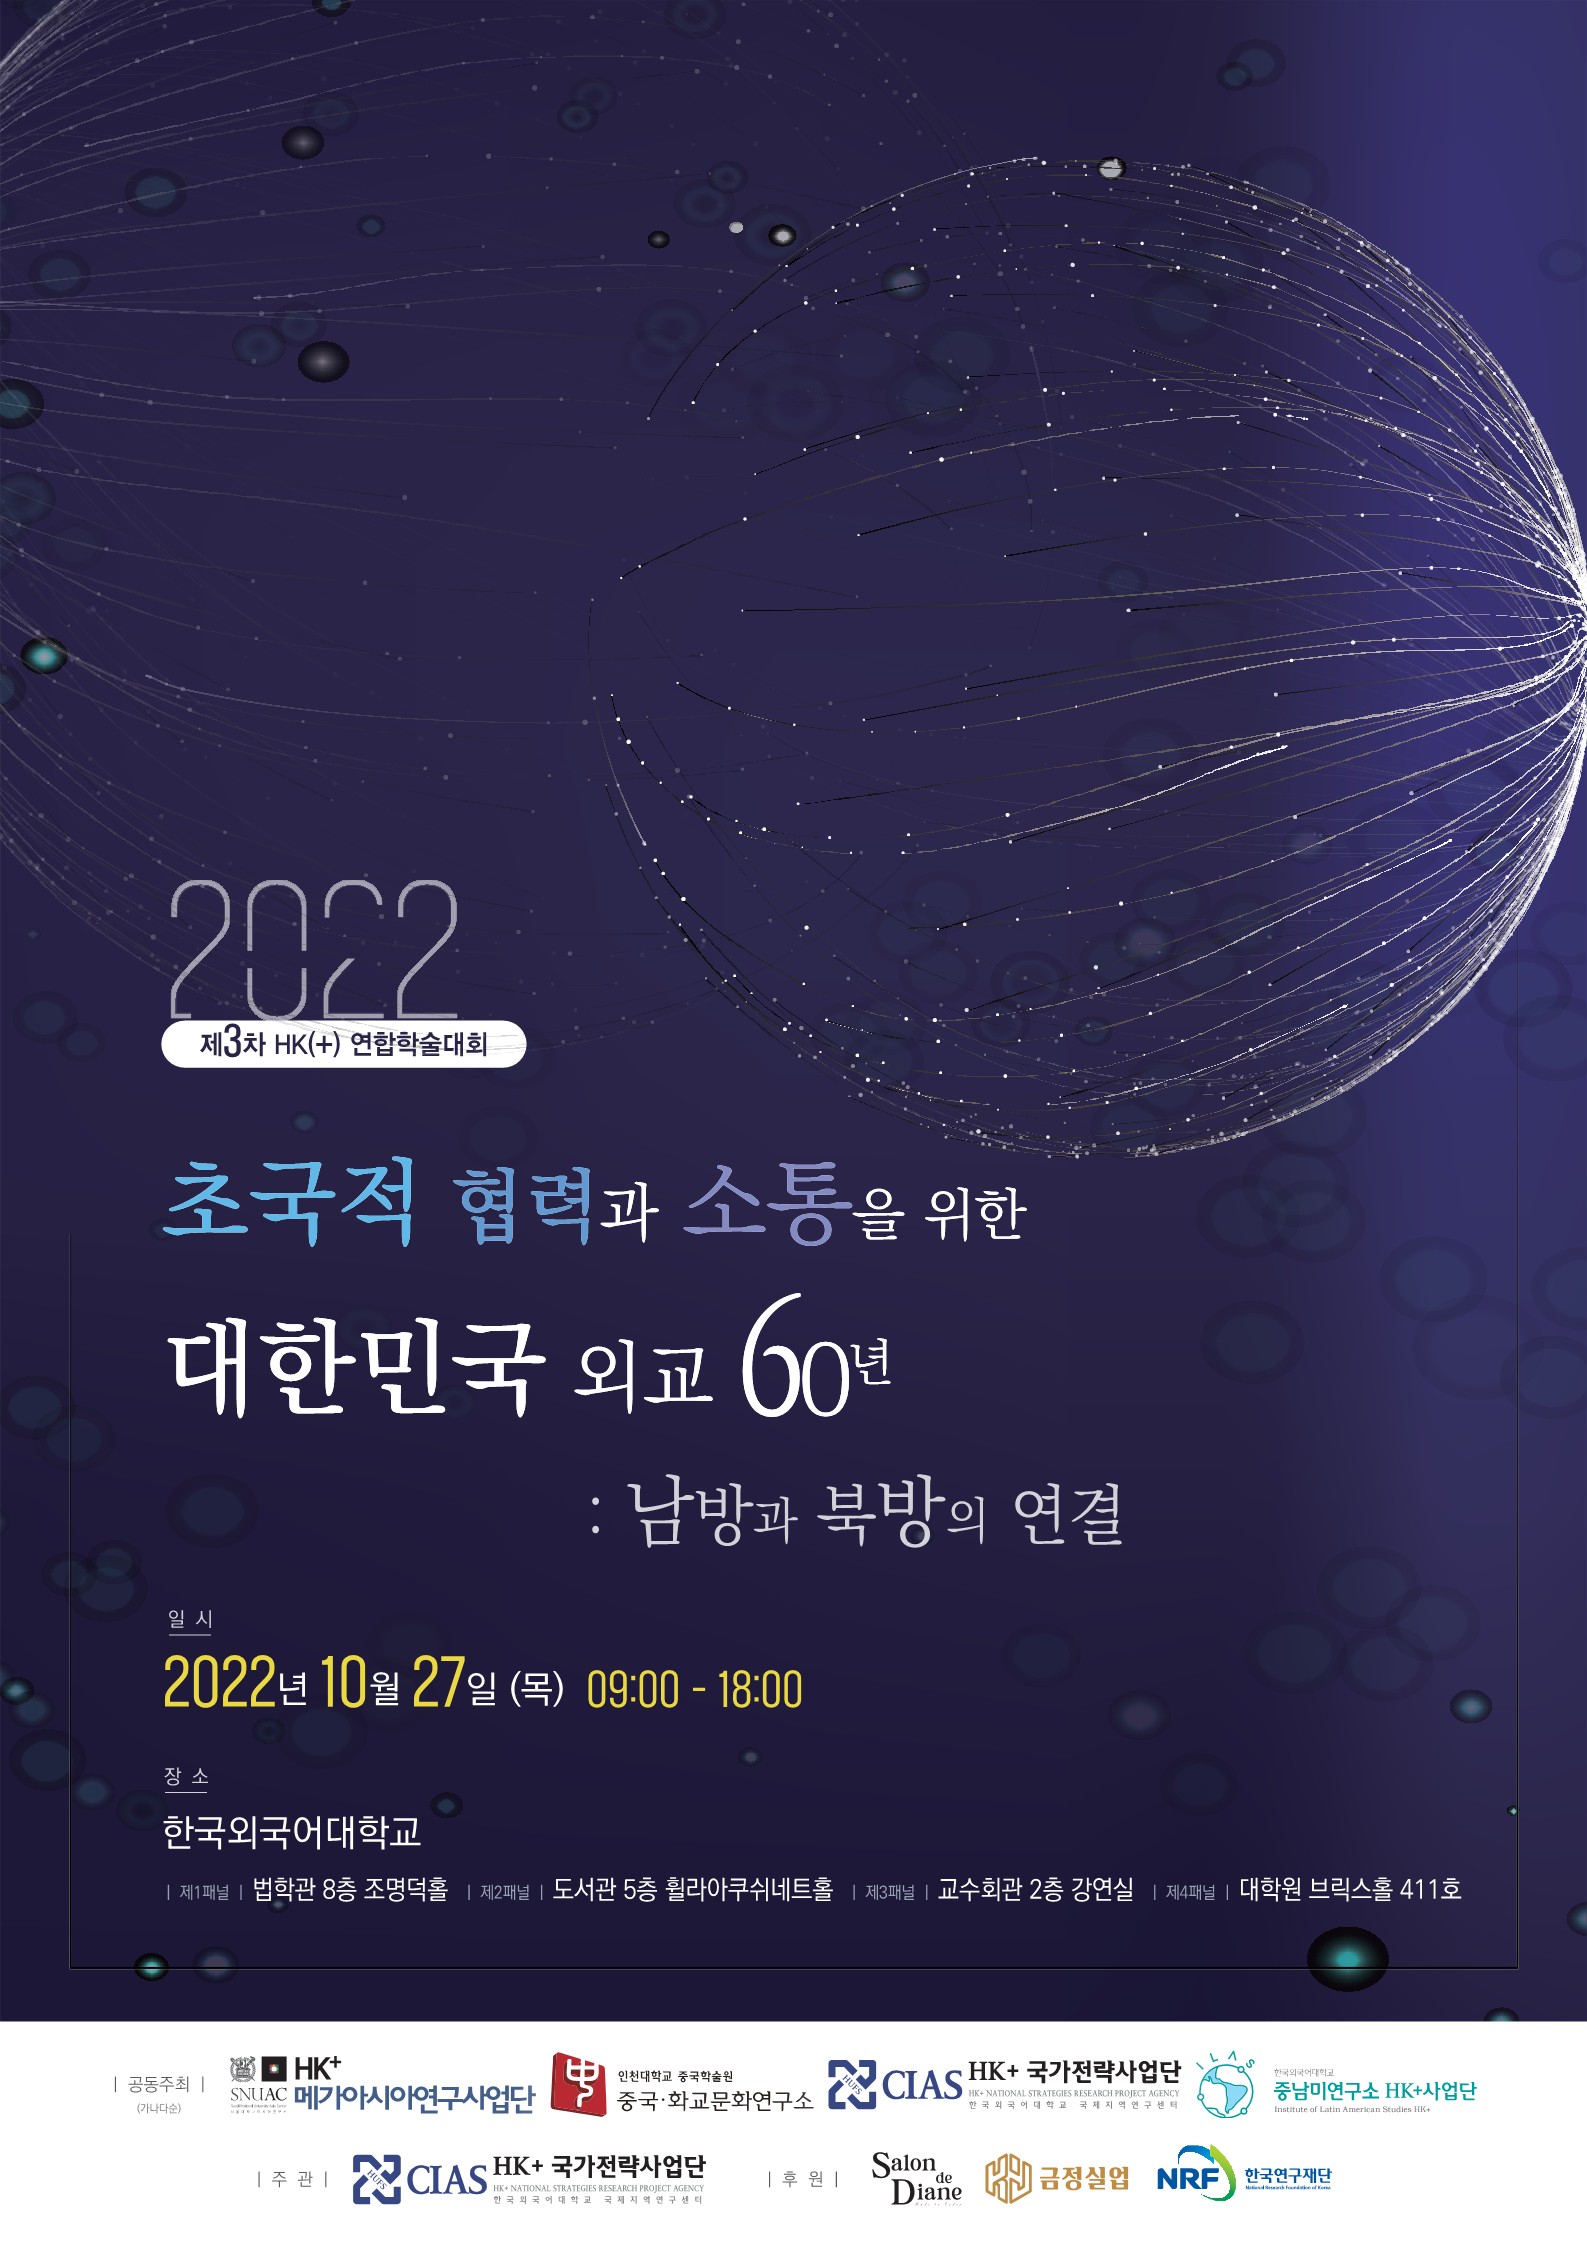 221027_HK(+) 연합학술대회_포스터_최종_1.jpg